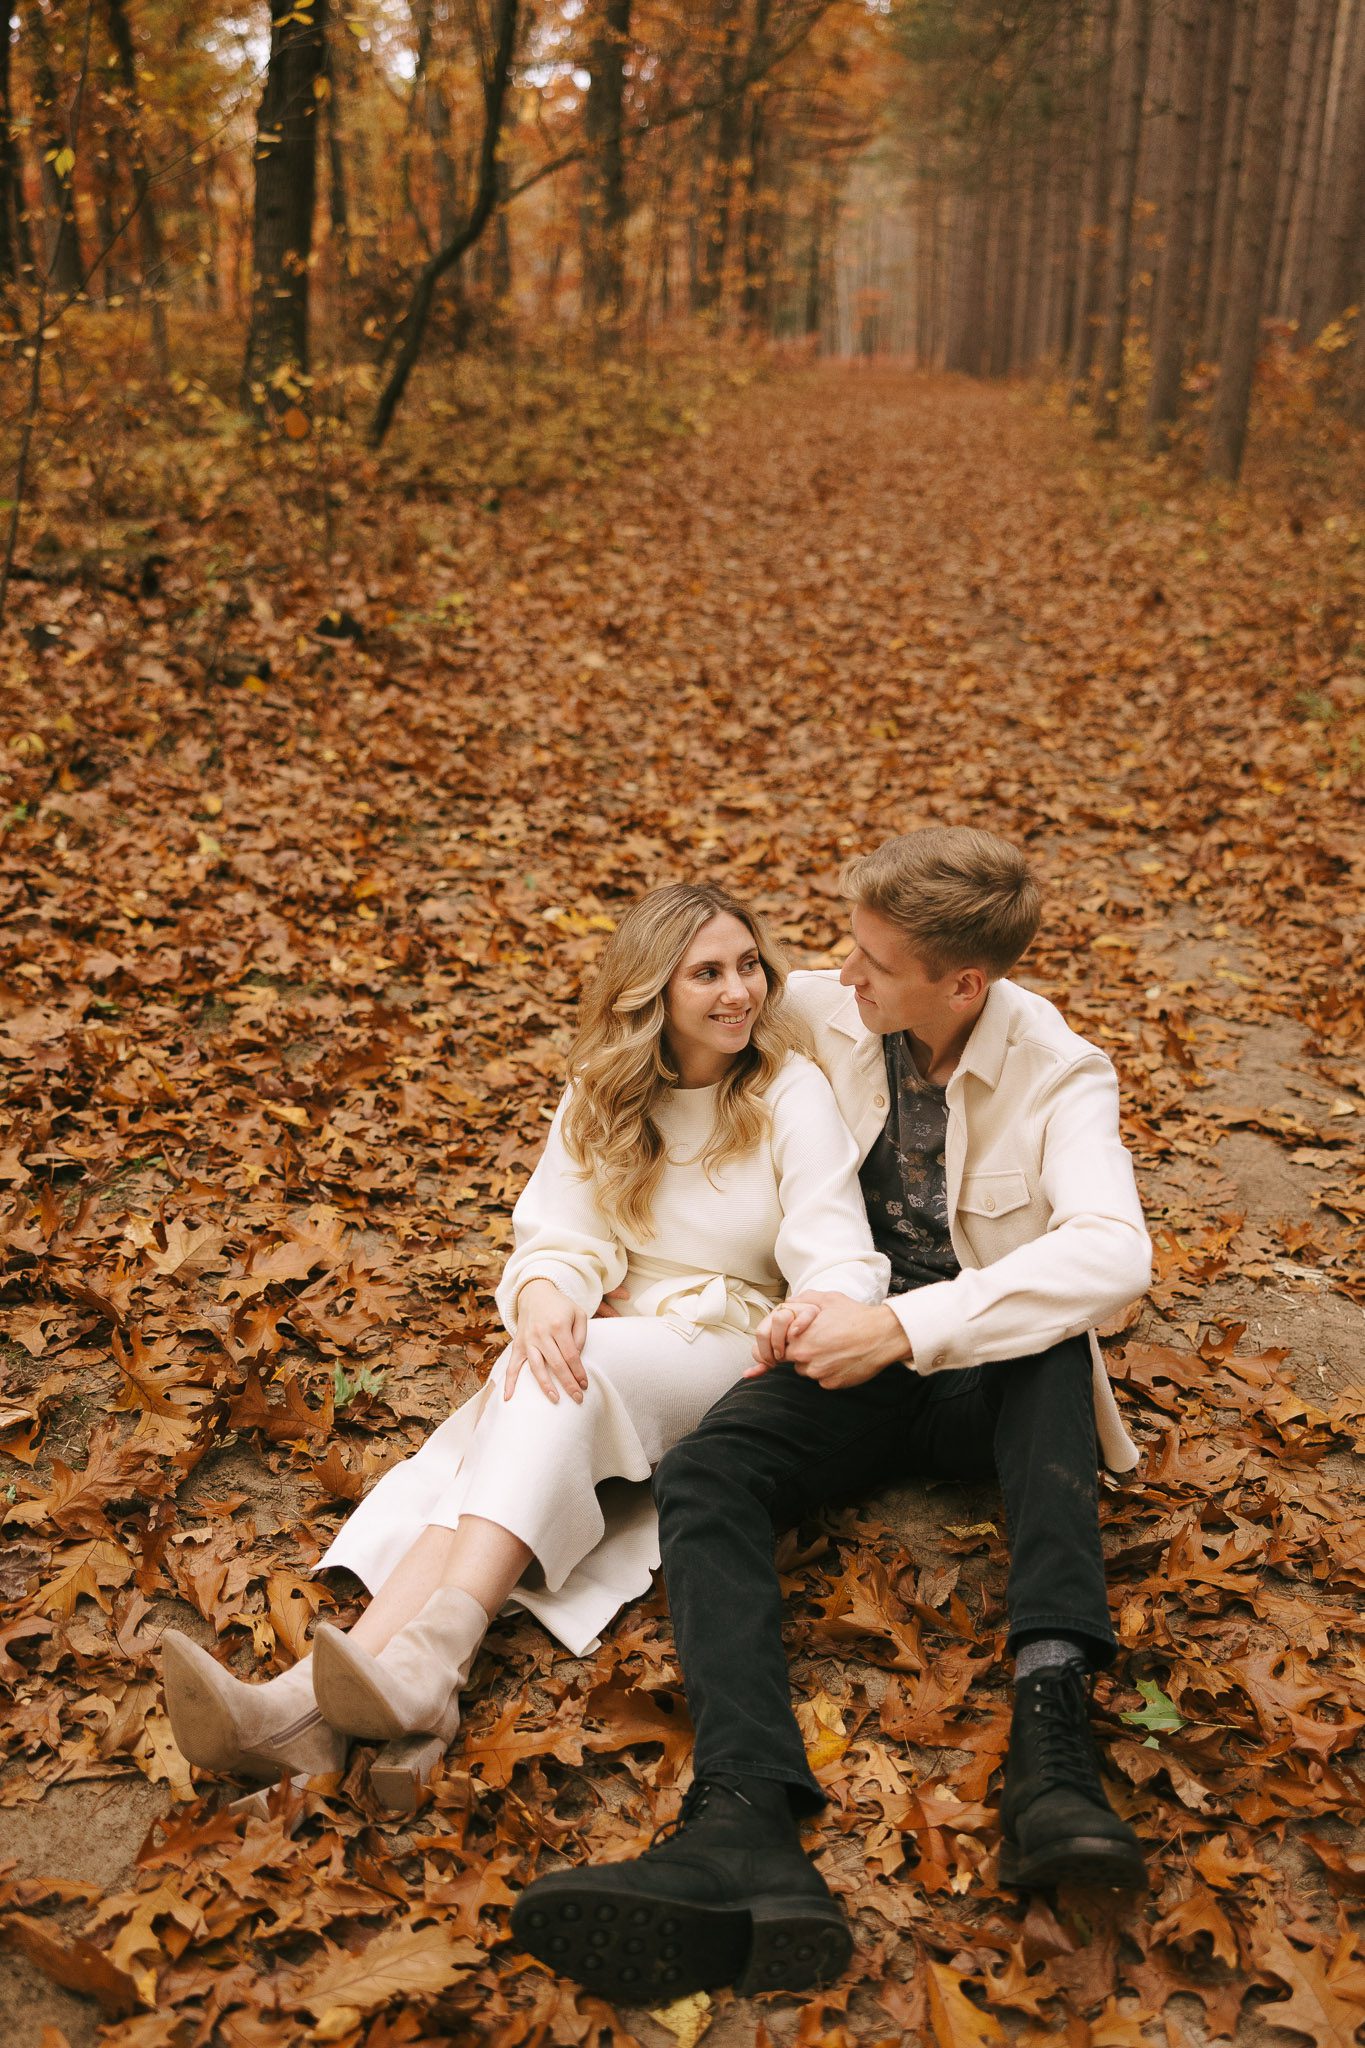 Sophia and Brad sit in the leaves 